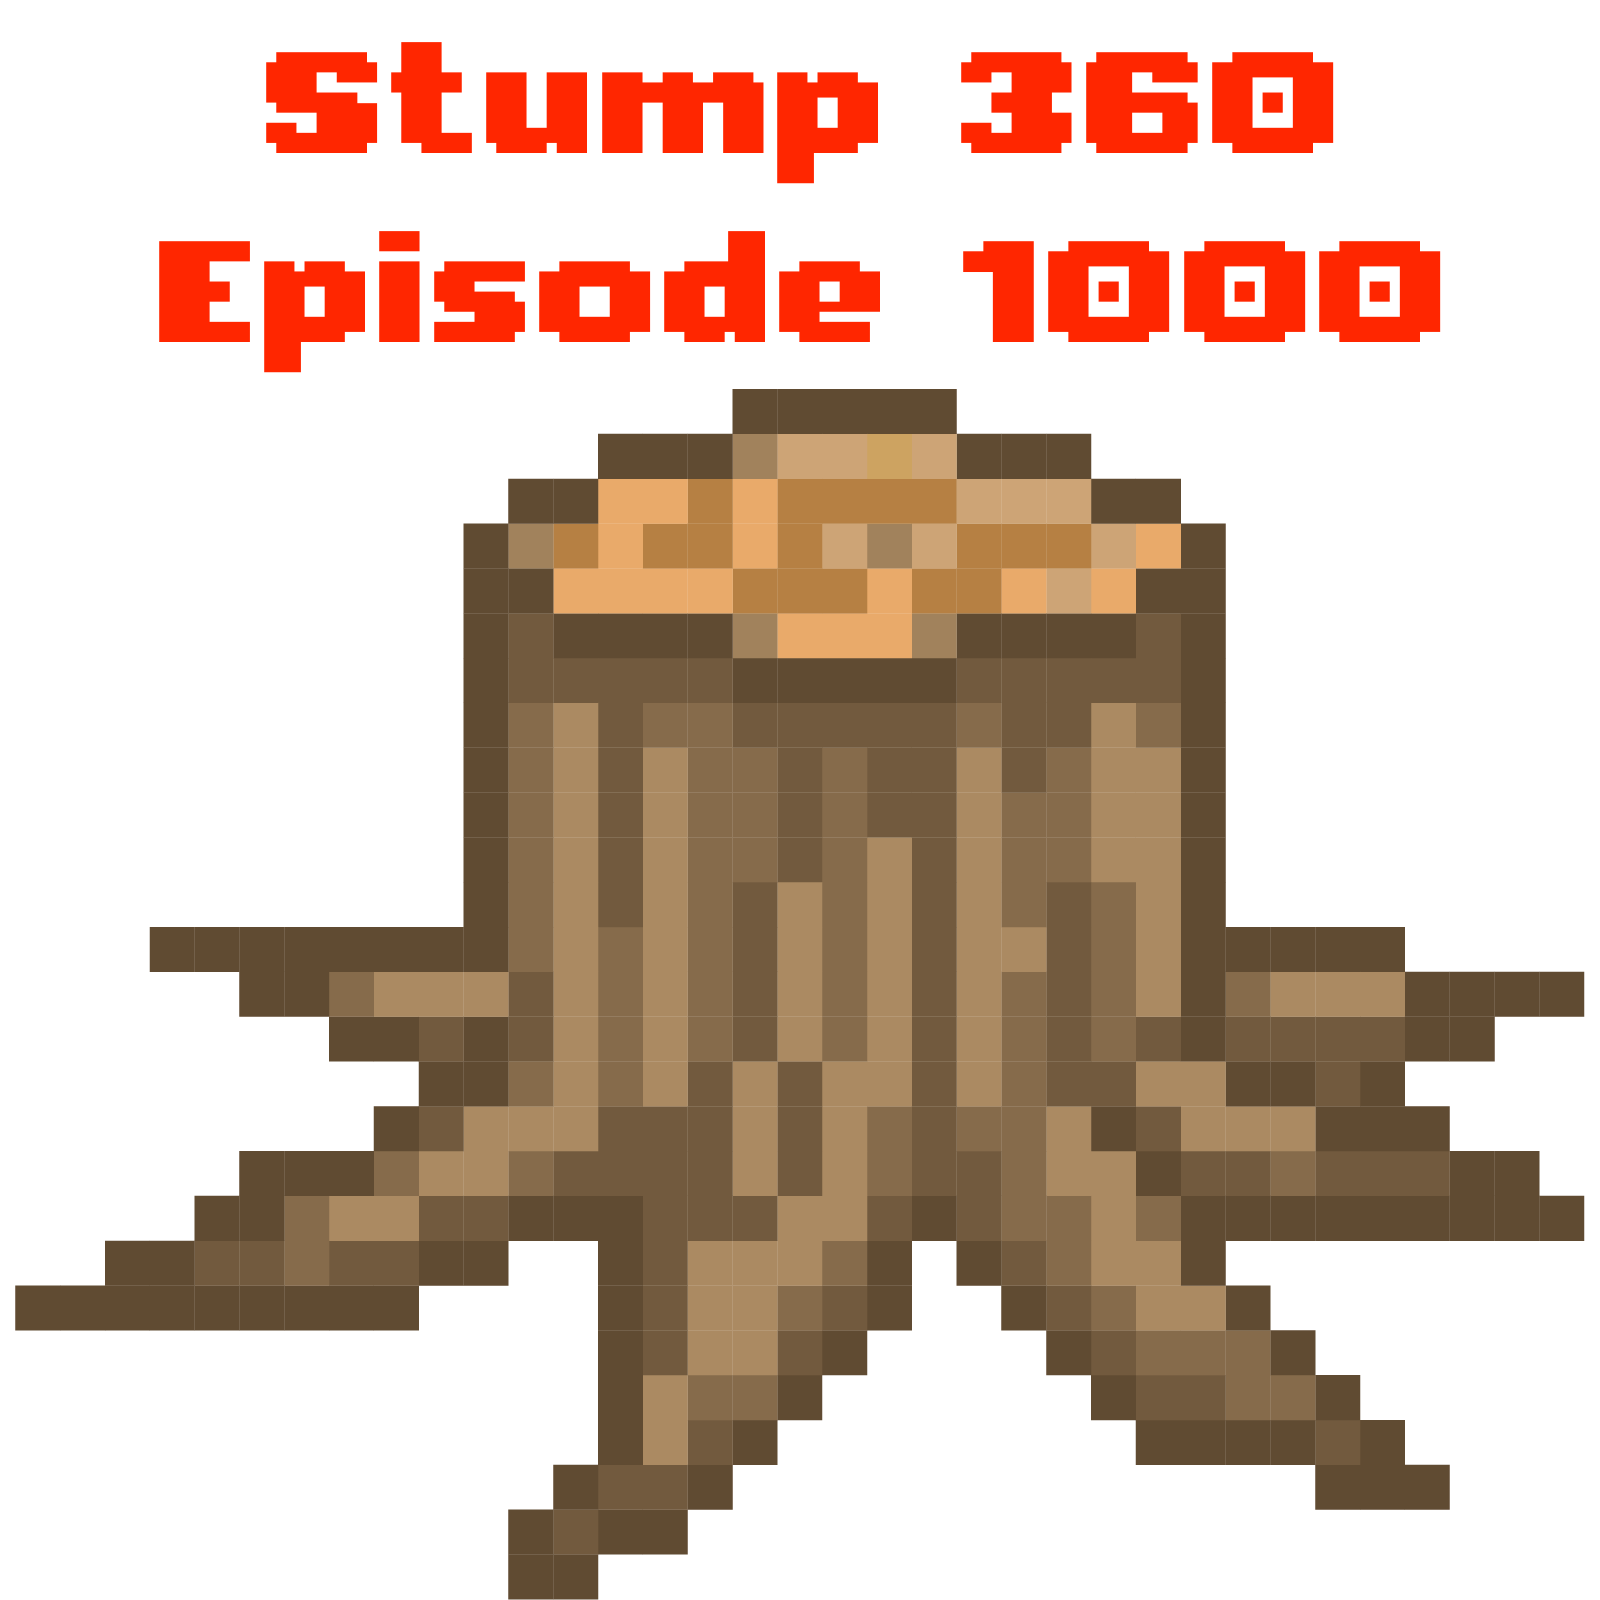 Stump 360 Episode 1000 logo